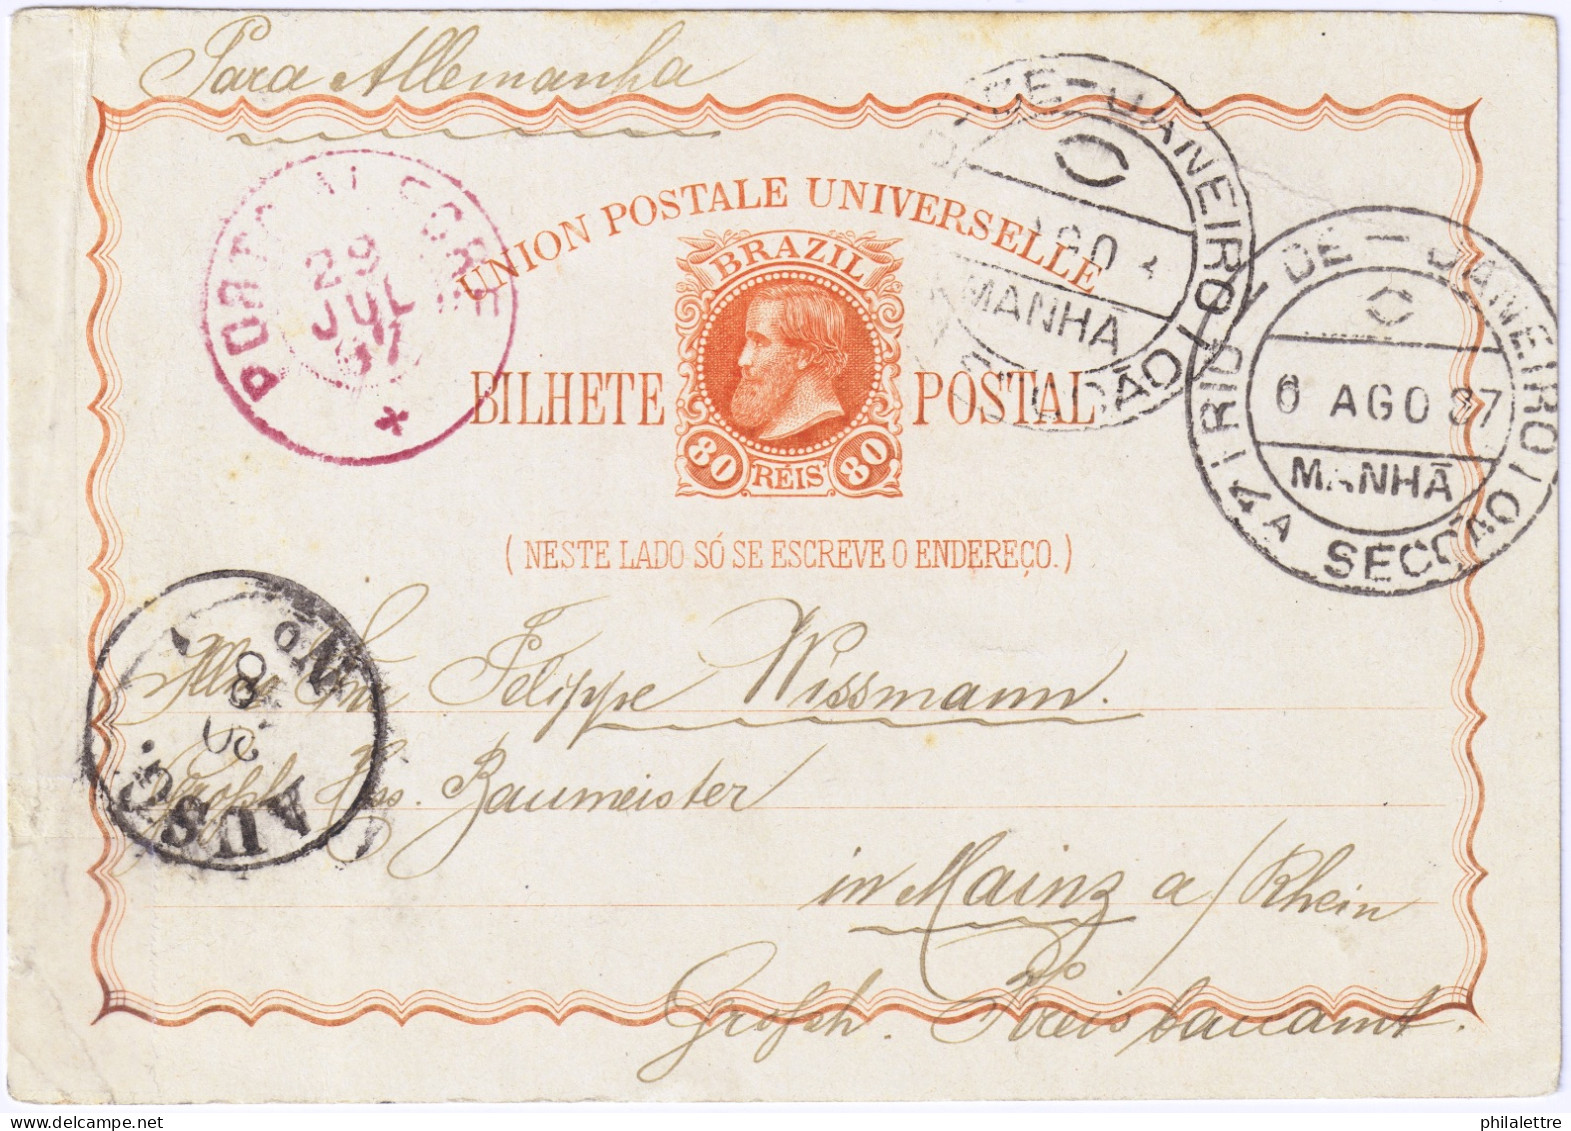 BRAZIL - 1887 - 80 Réis Postal Card Addressed From PORTO ALEGRE To Mainz, Germany Via Rio De Janeiro - Postal Stationery